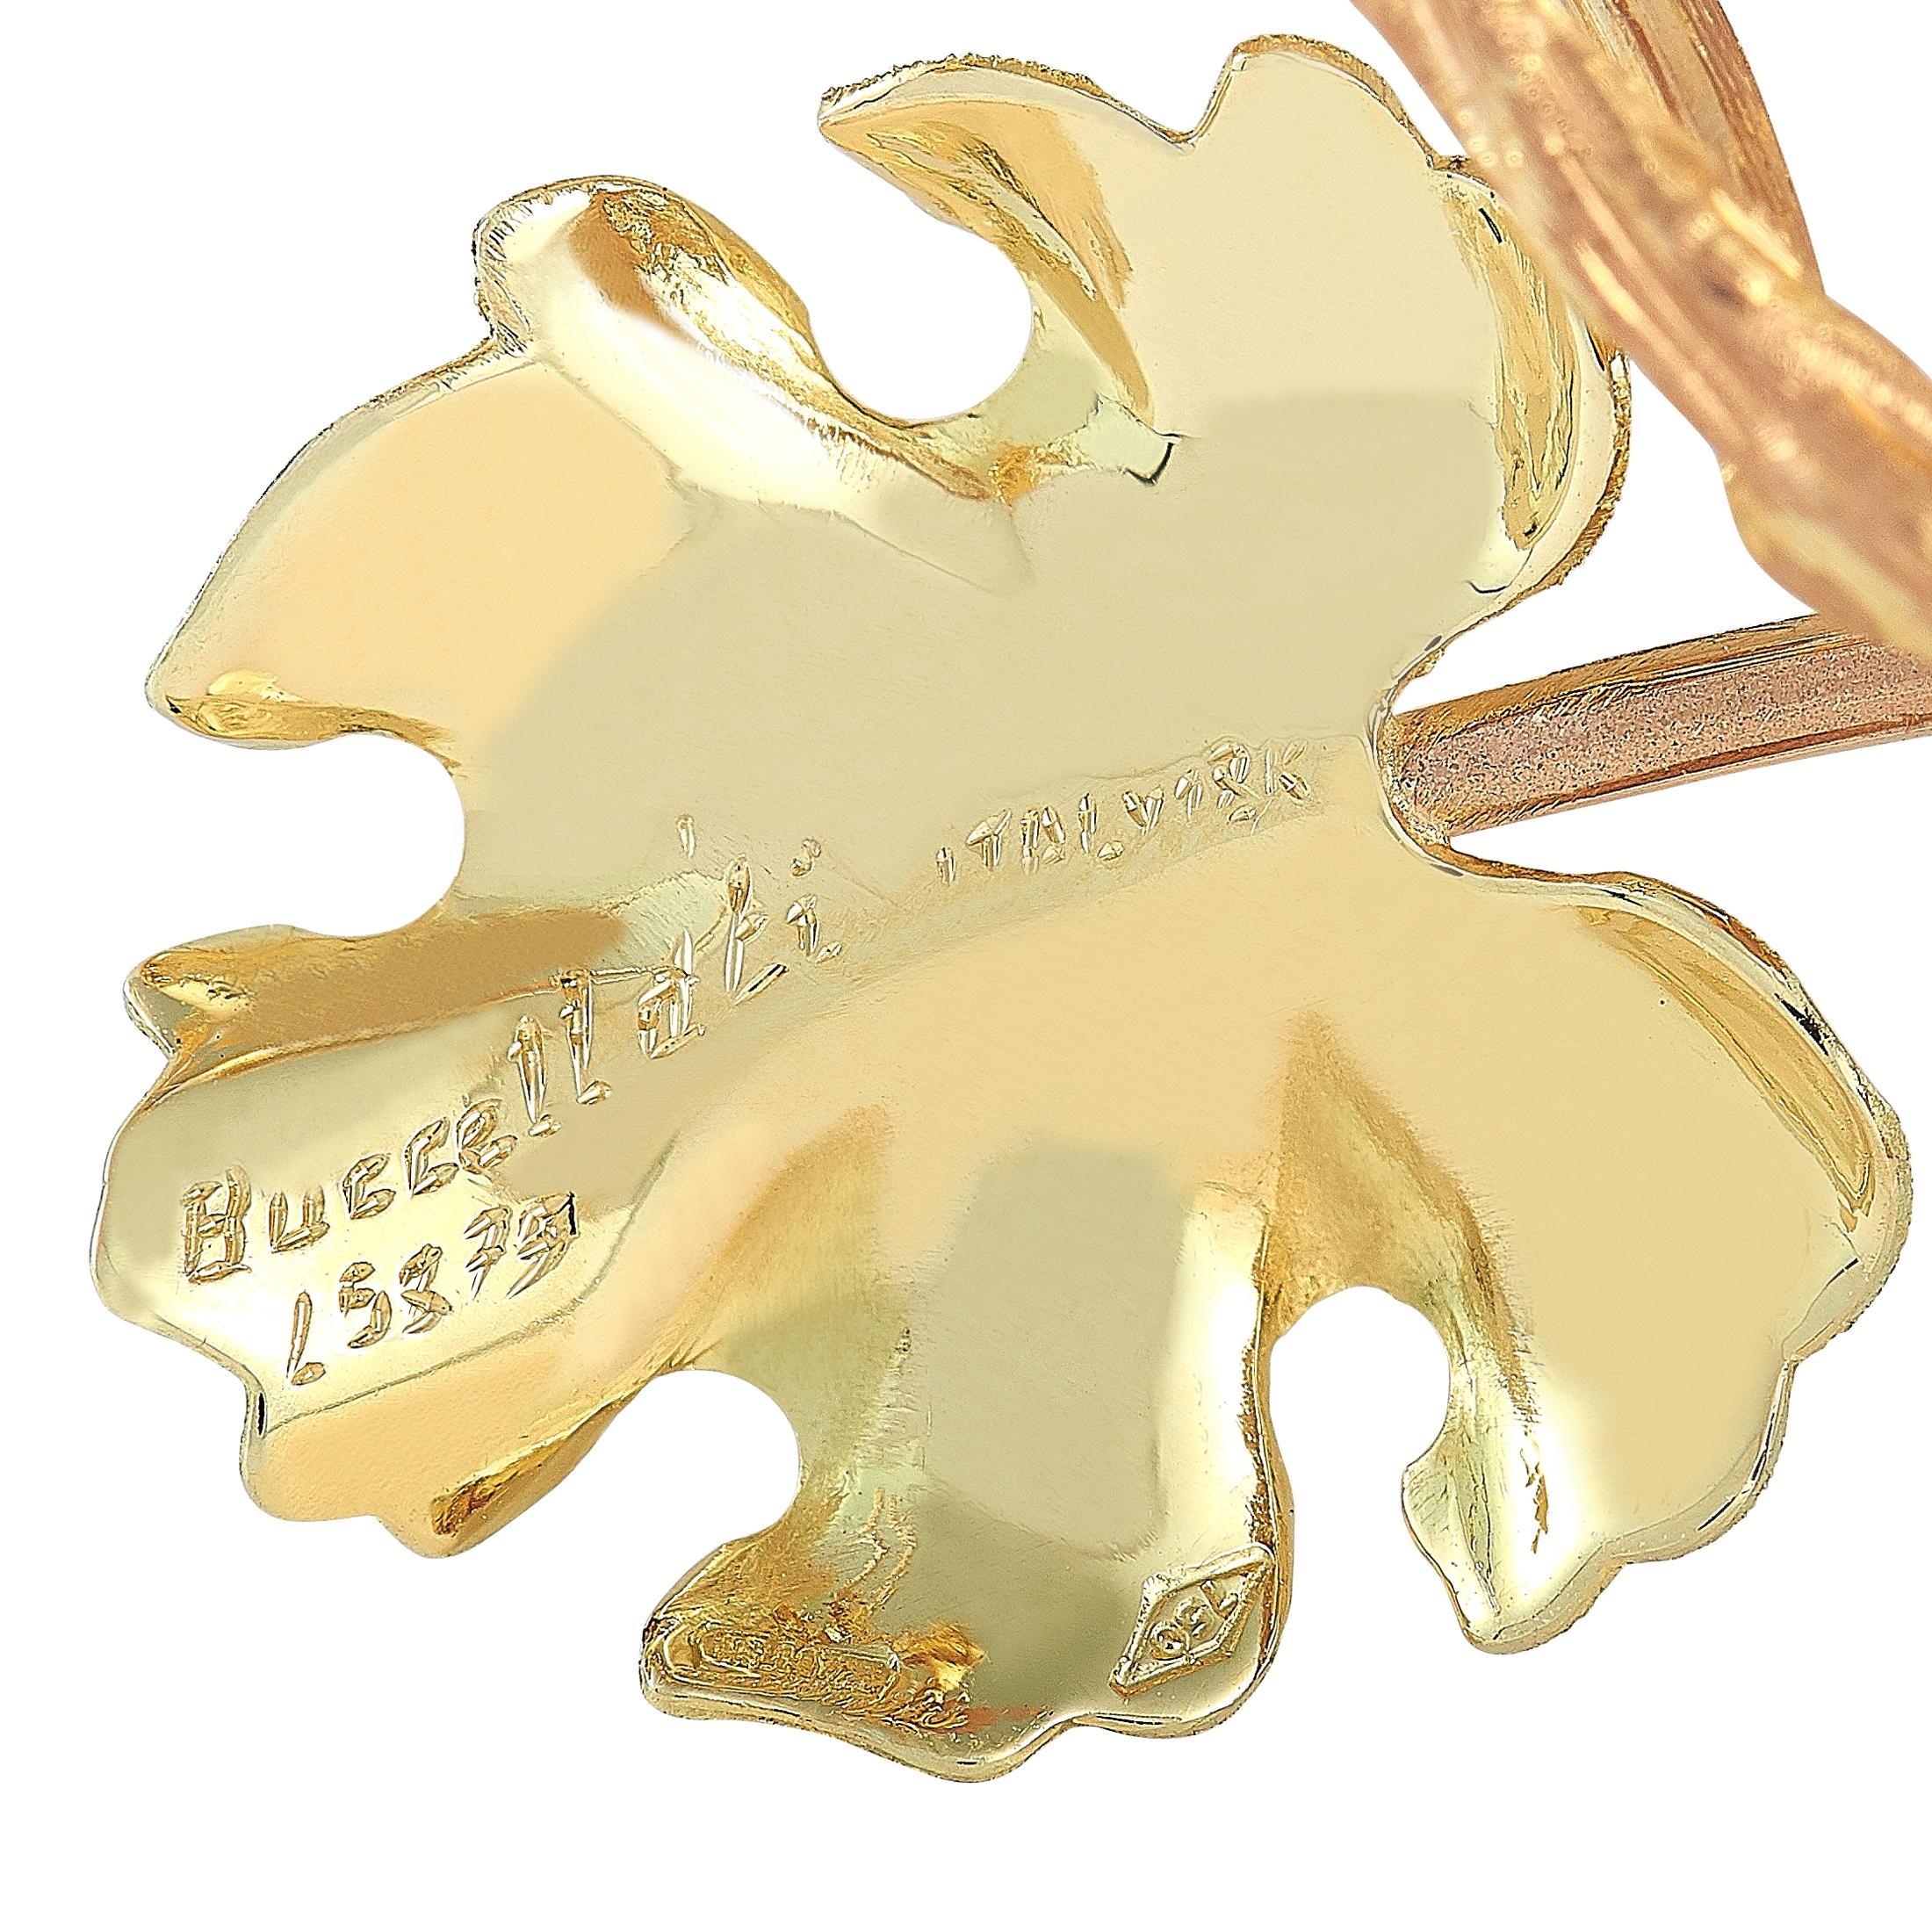 Women's Buccellati 18 Karat Yellow Gold Brooch